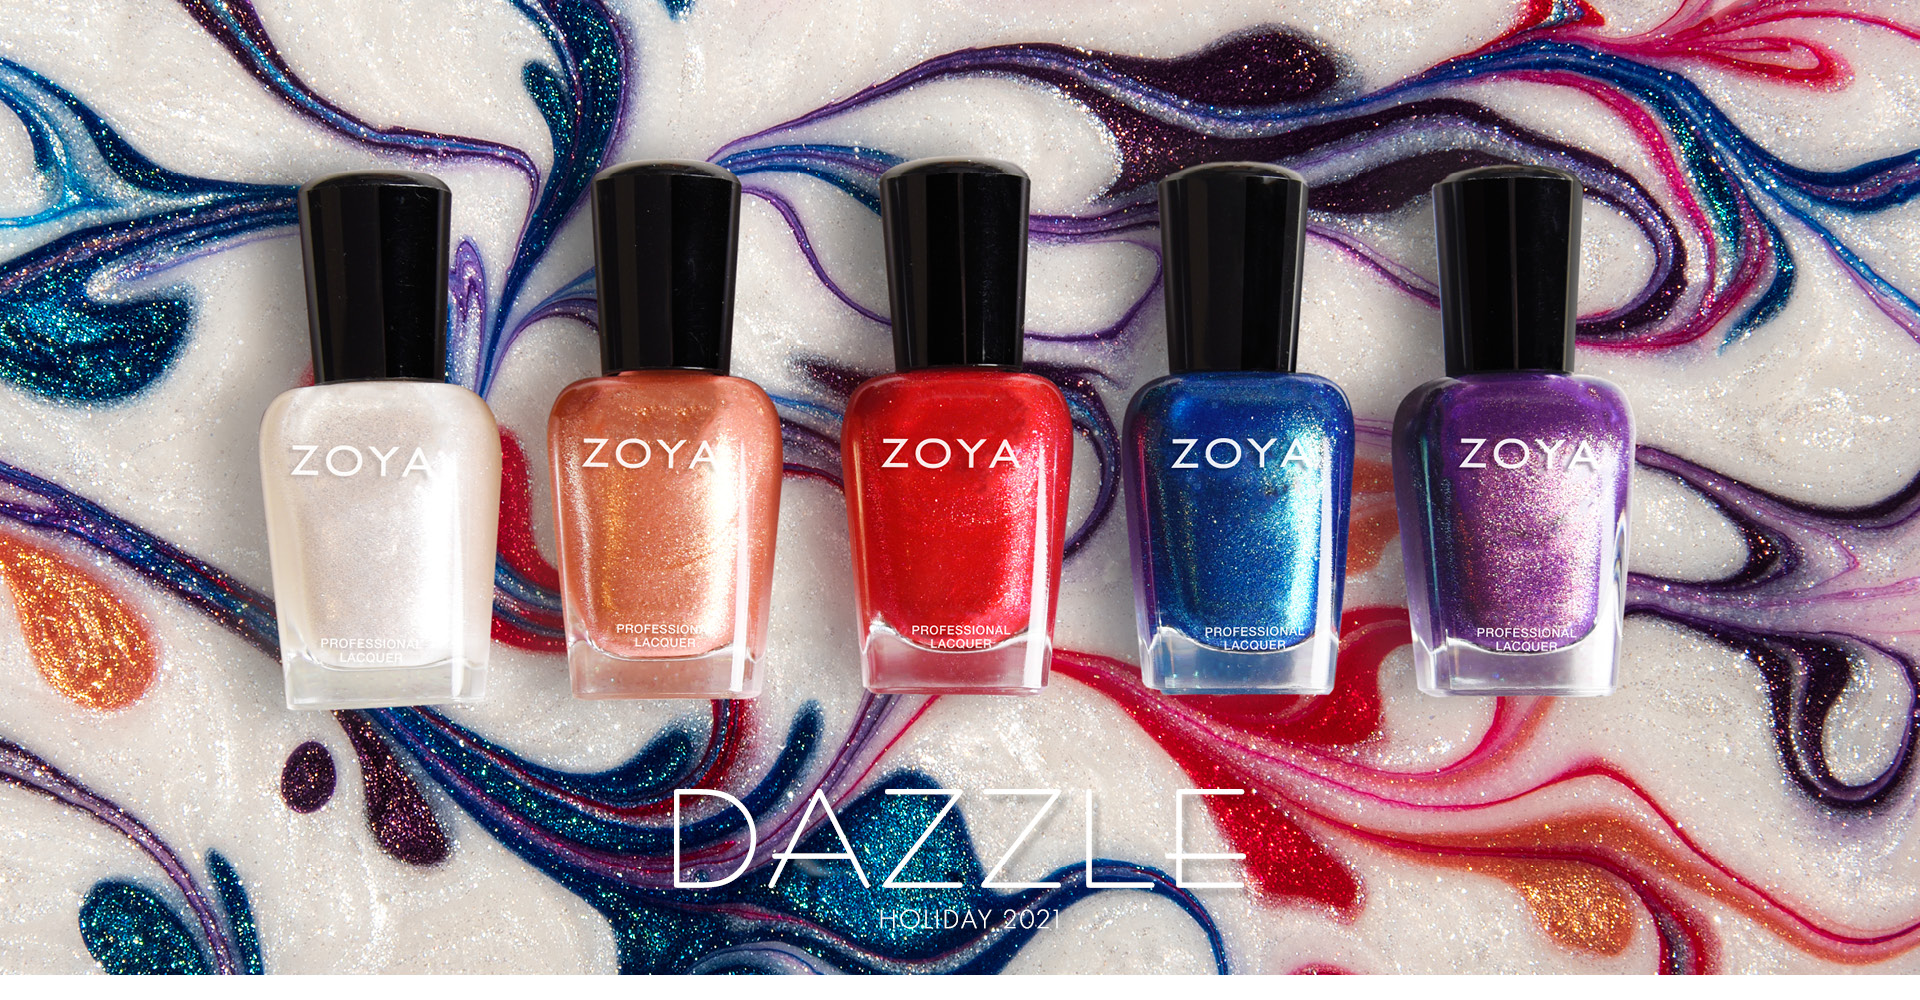 5 ZOYA Nail Polish Colors for 2018 - Zoya Manicure Looks